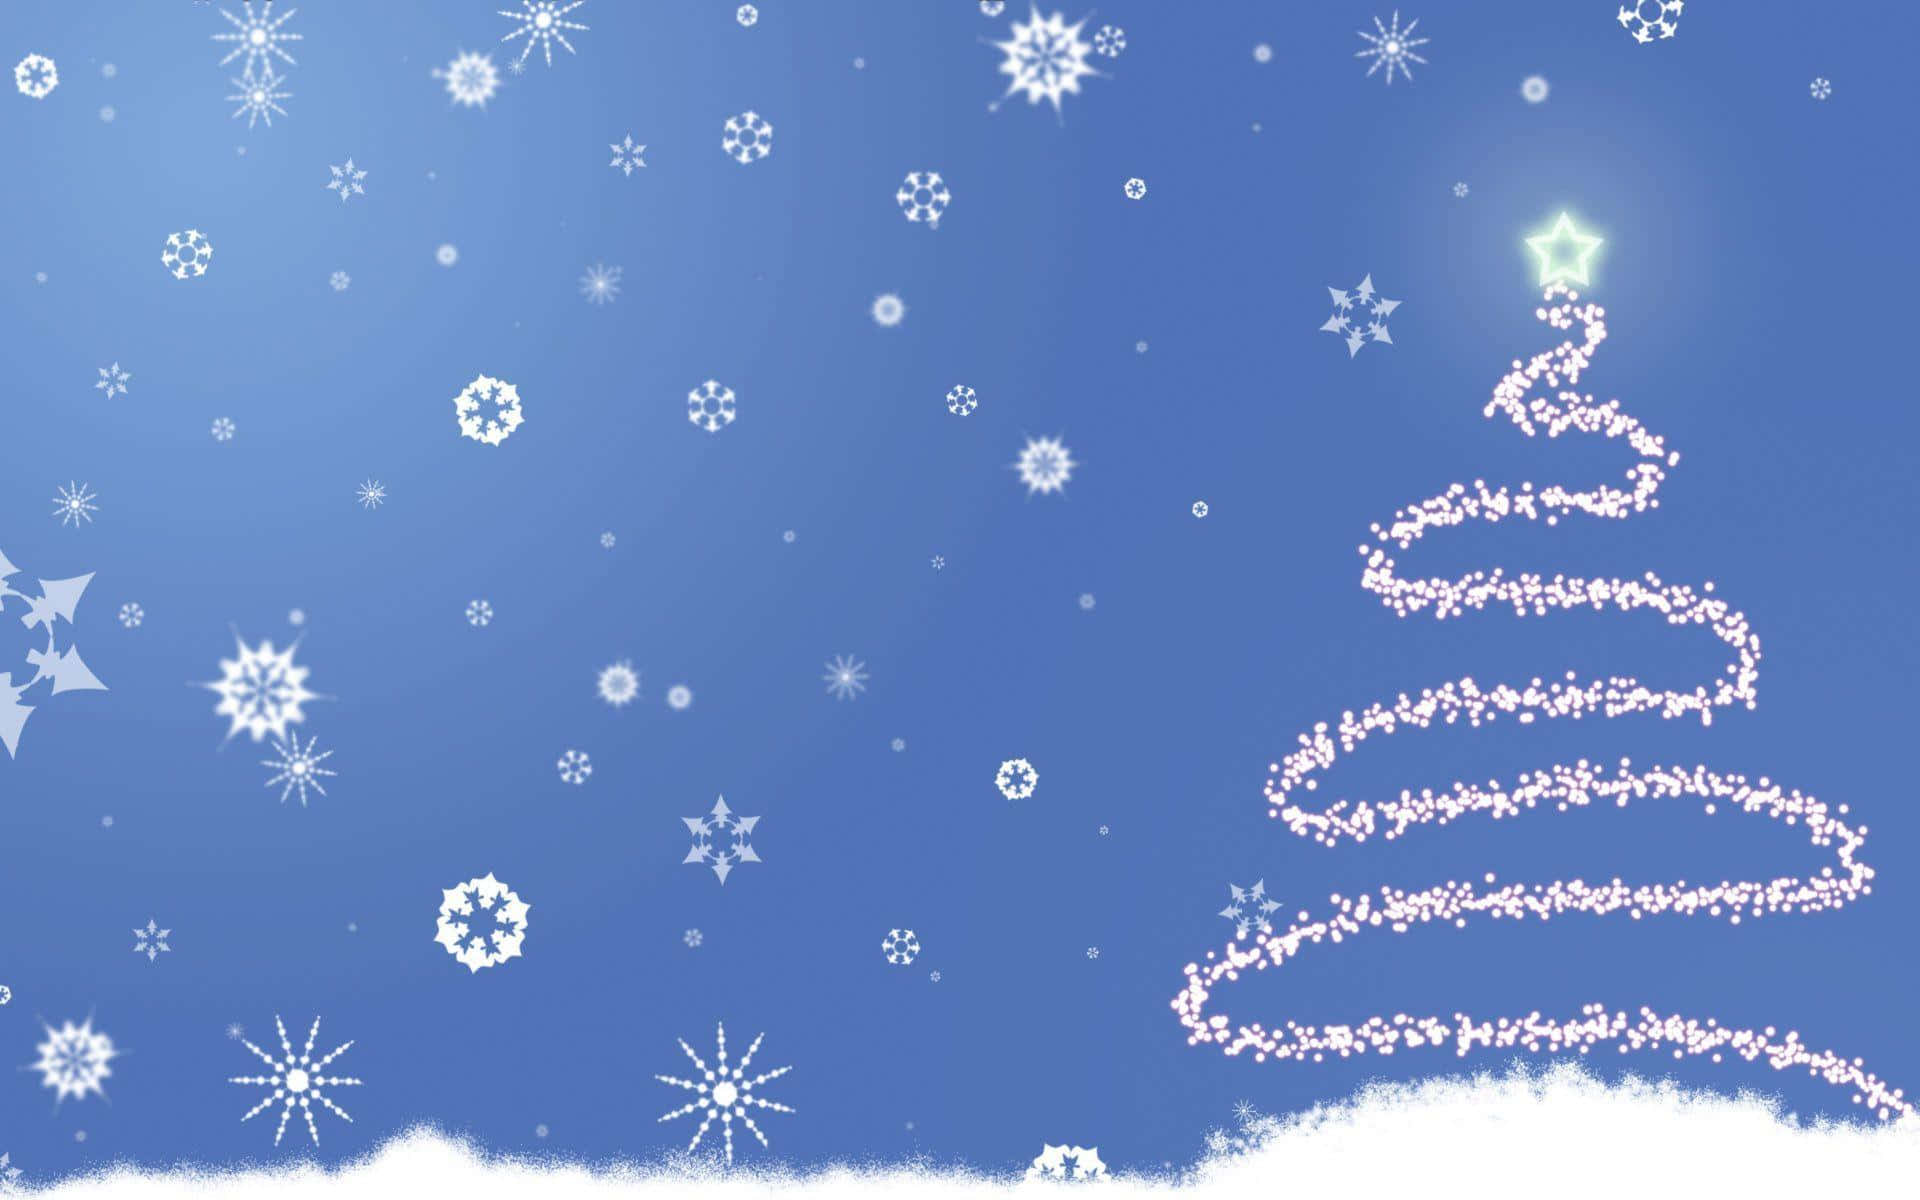 Blue Christmas Theme Background Snowflakes And Christmas Tree